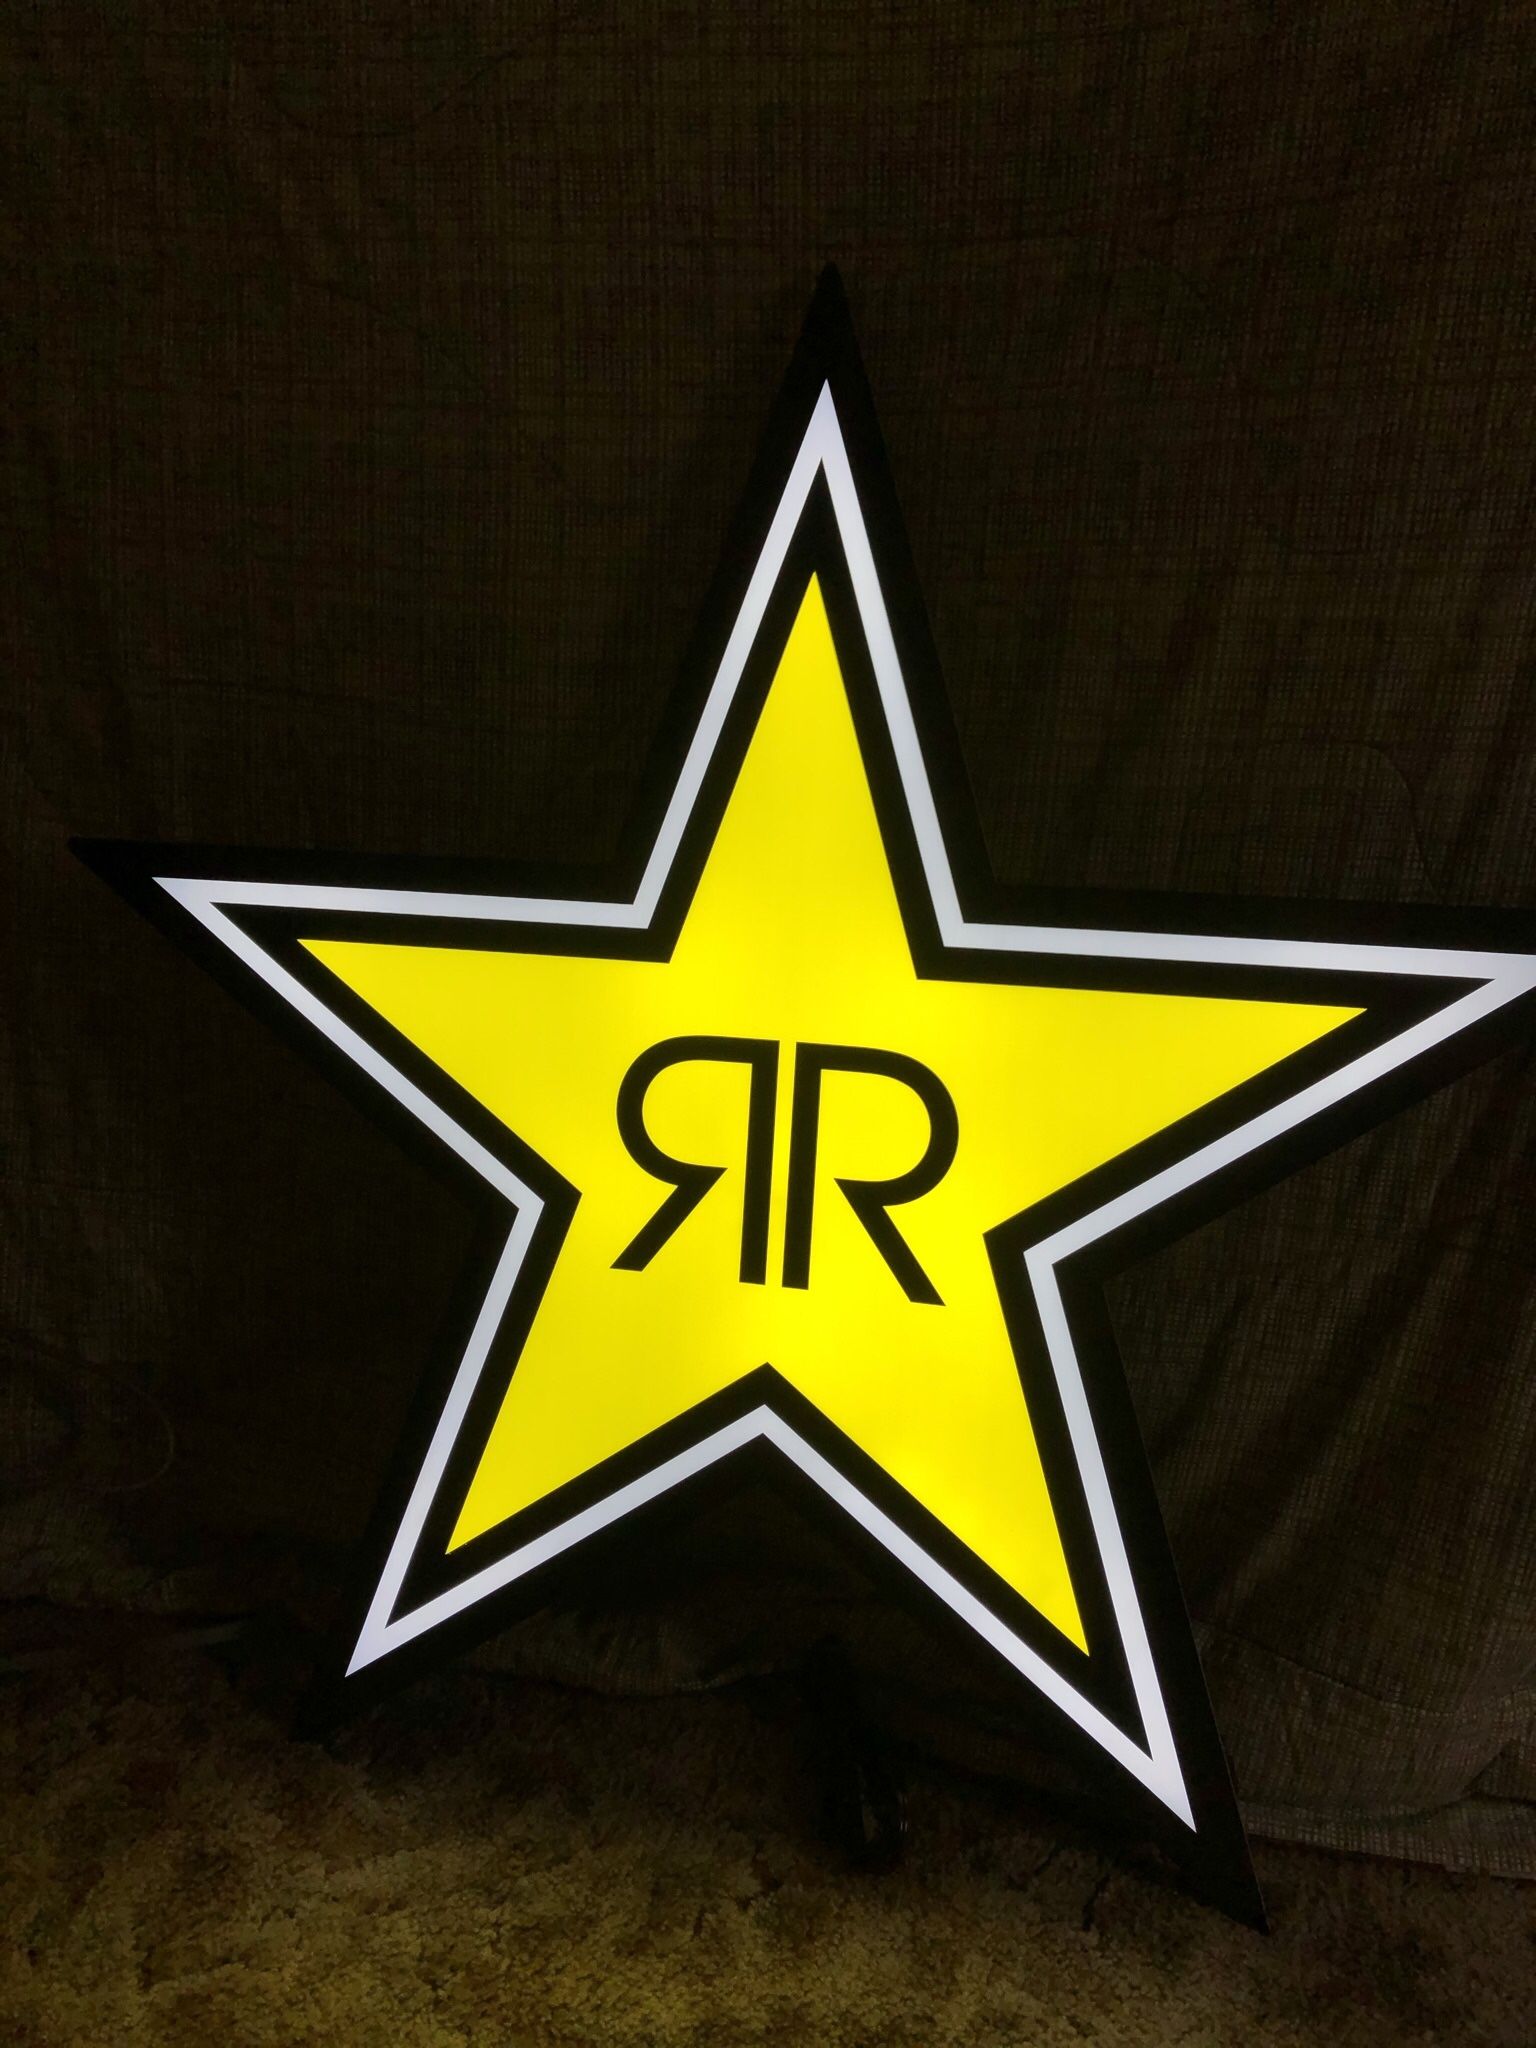 Rockstar Neon Sign